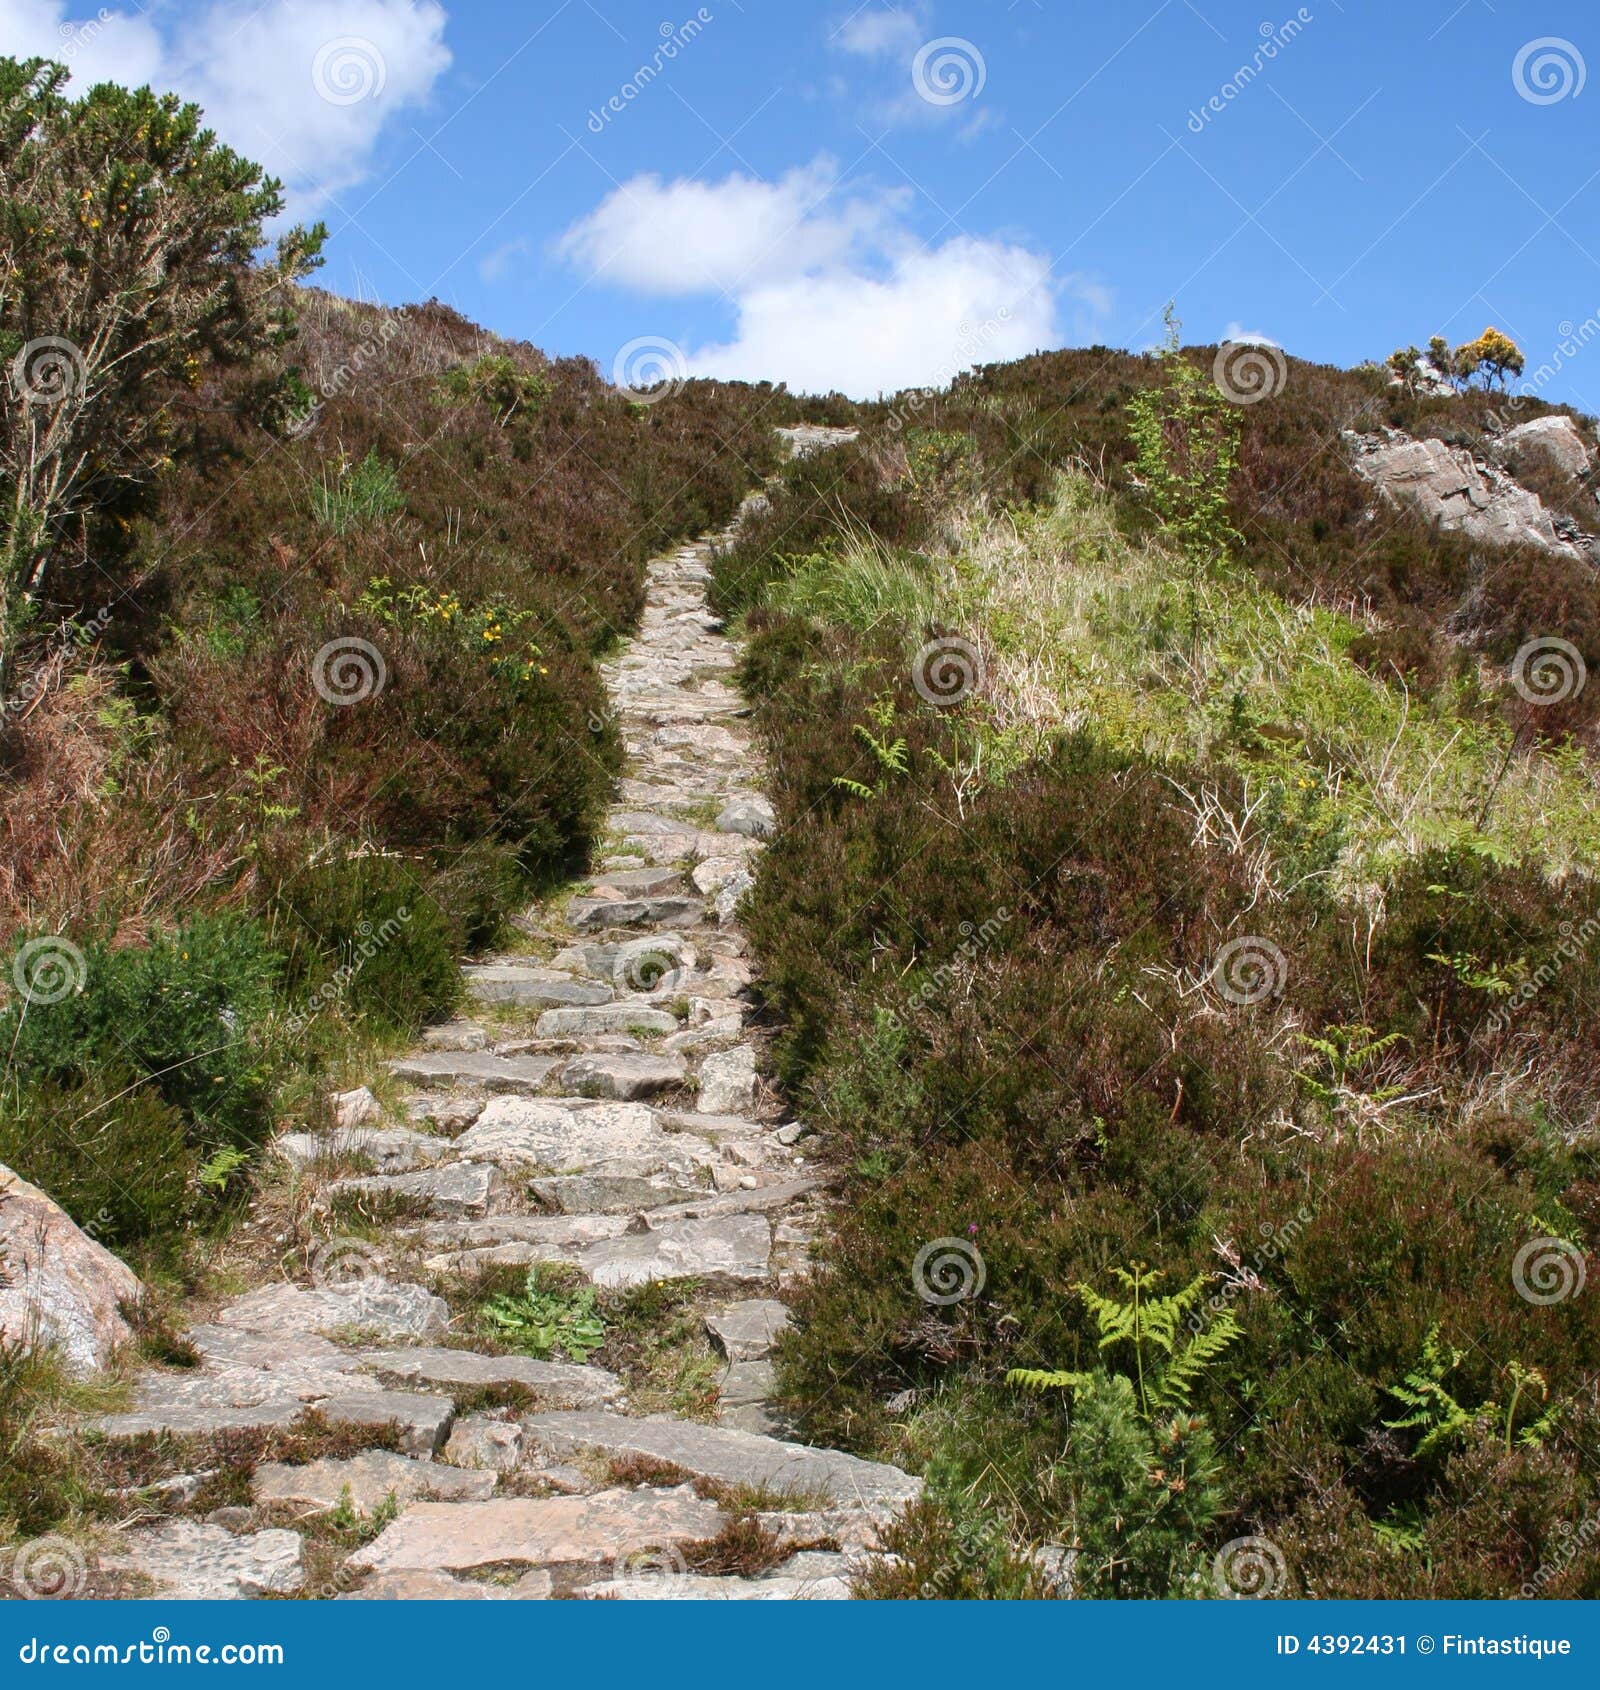 footpath leading uphill